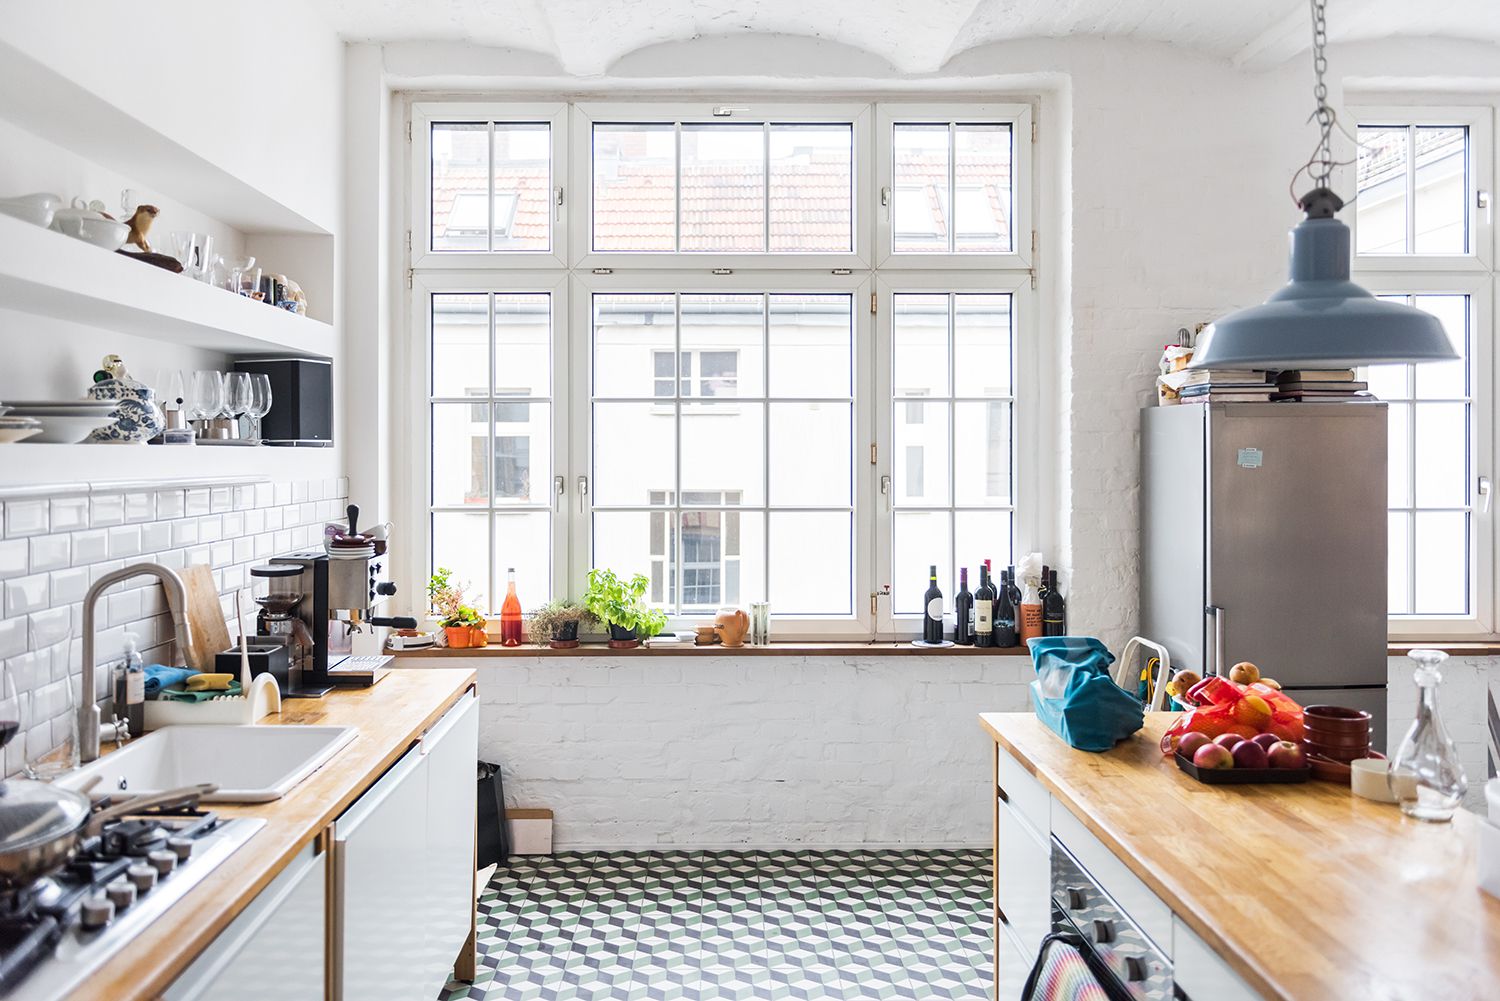 windows 1 80+ Unusual Kitchen Design Ideas for Small Spaces - 40